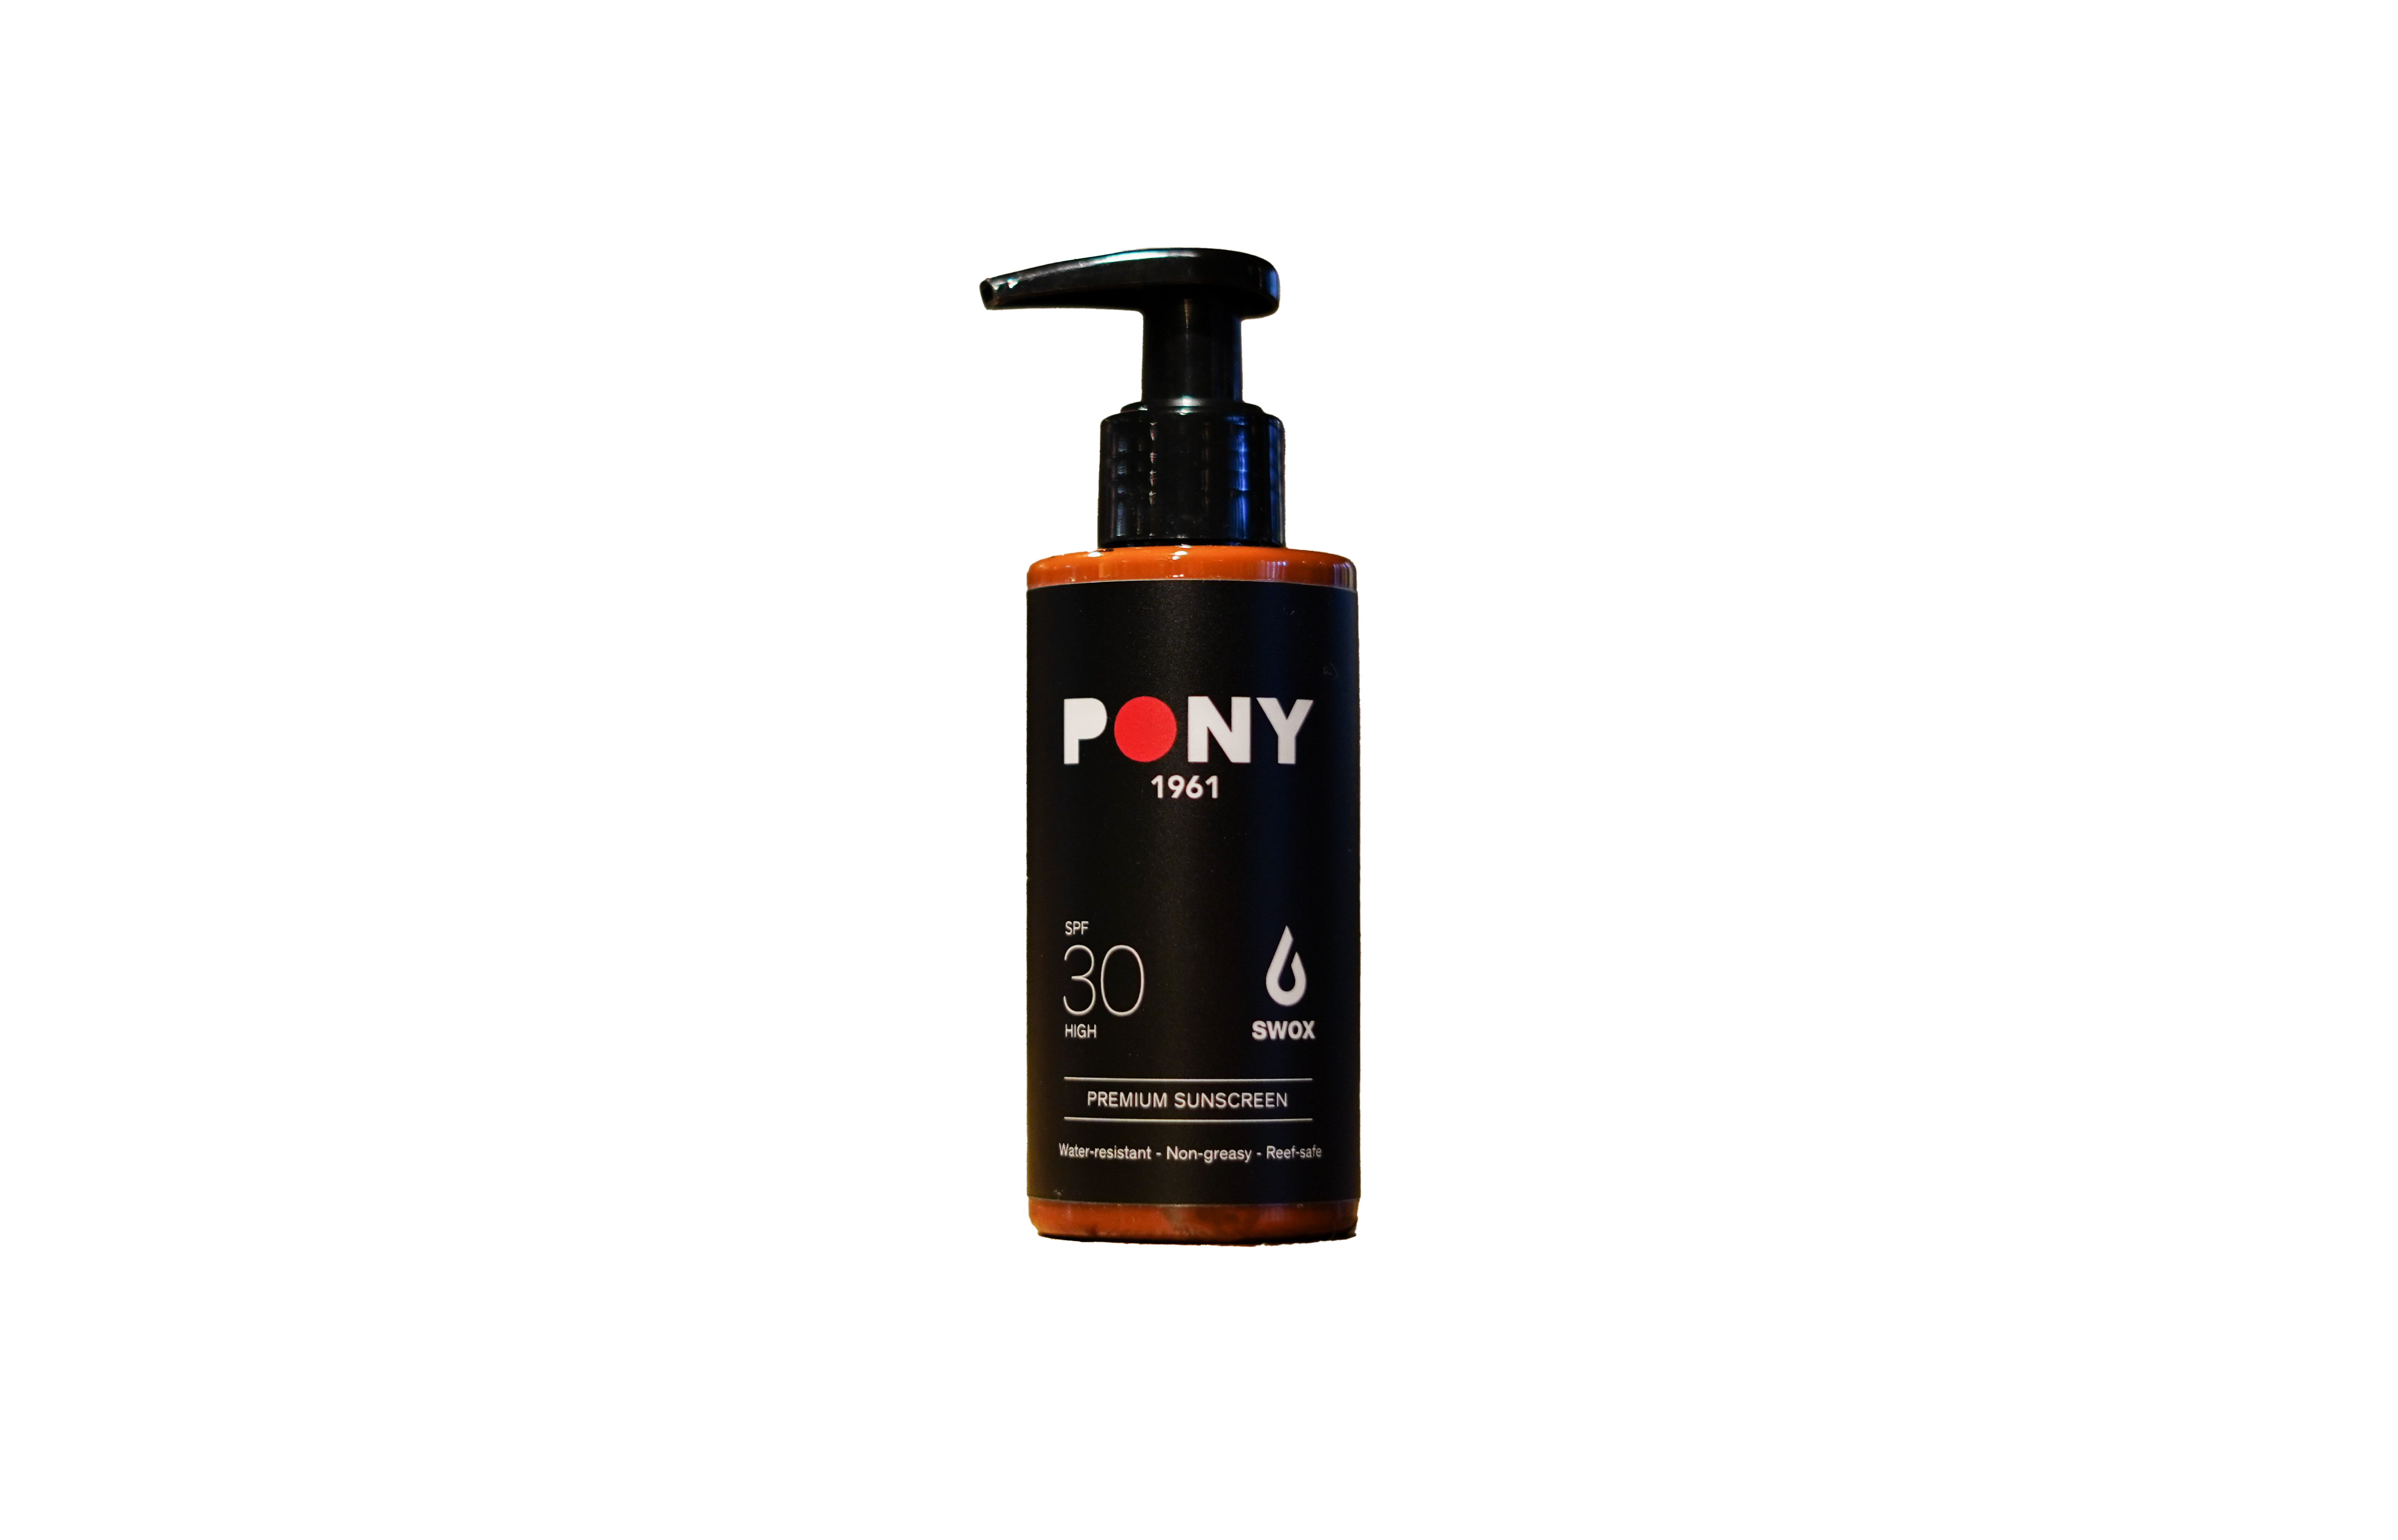 Pony Premium Sunscreen by SWOX